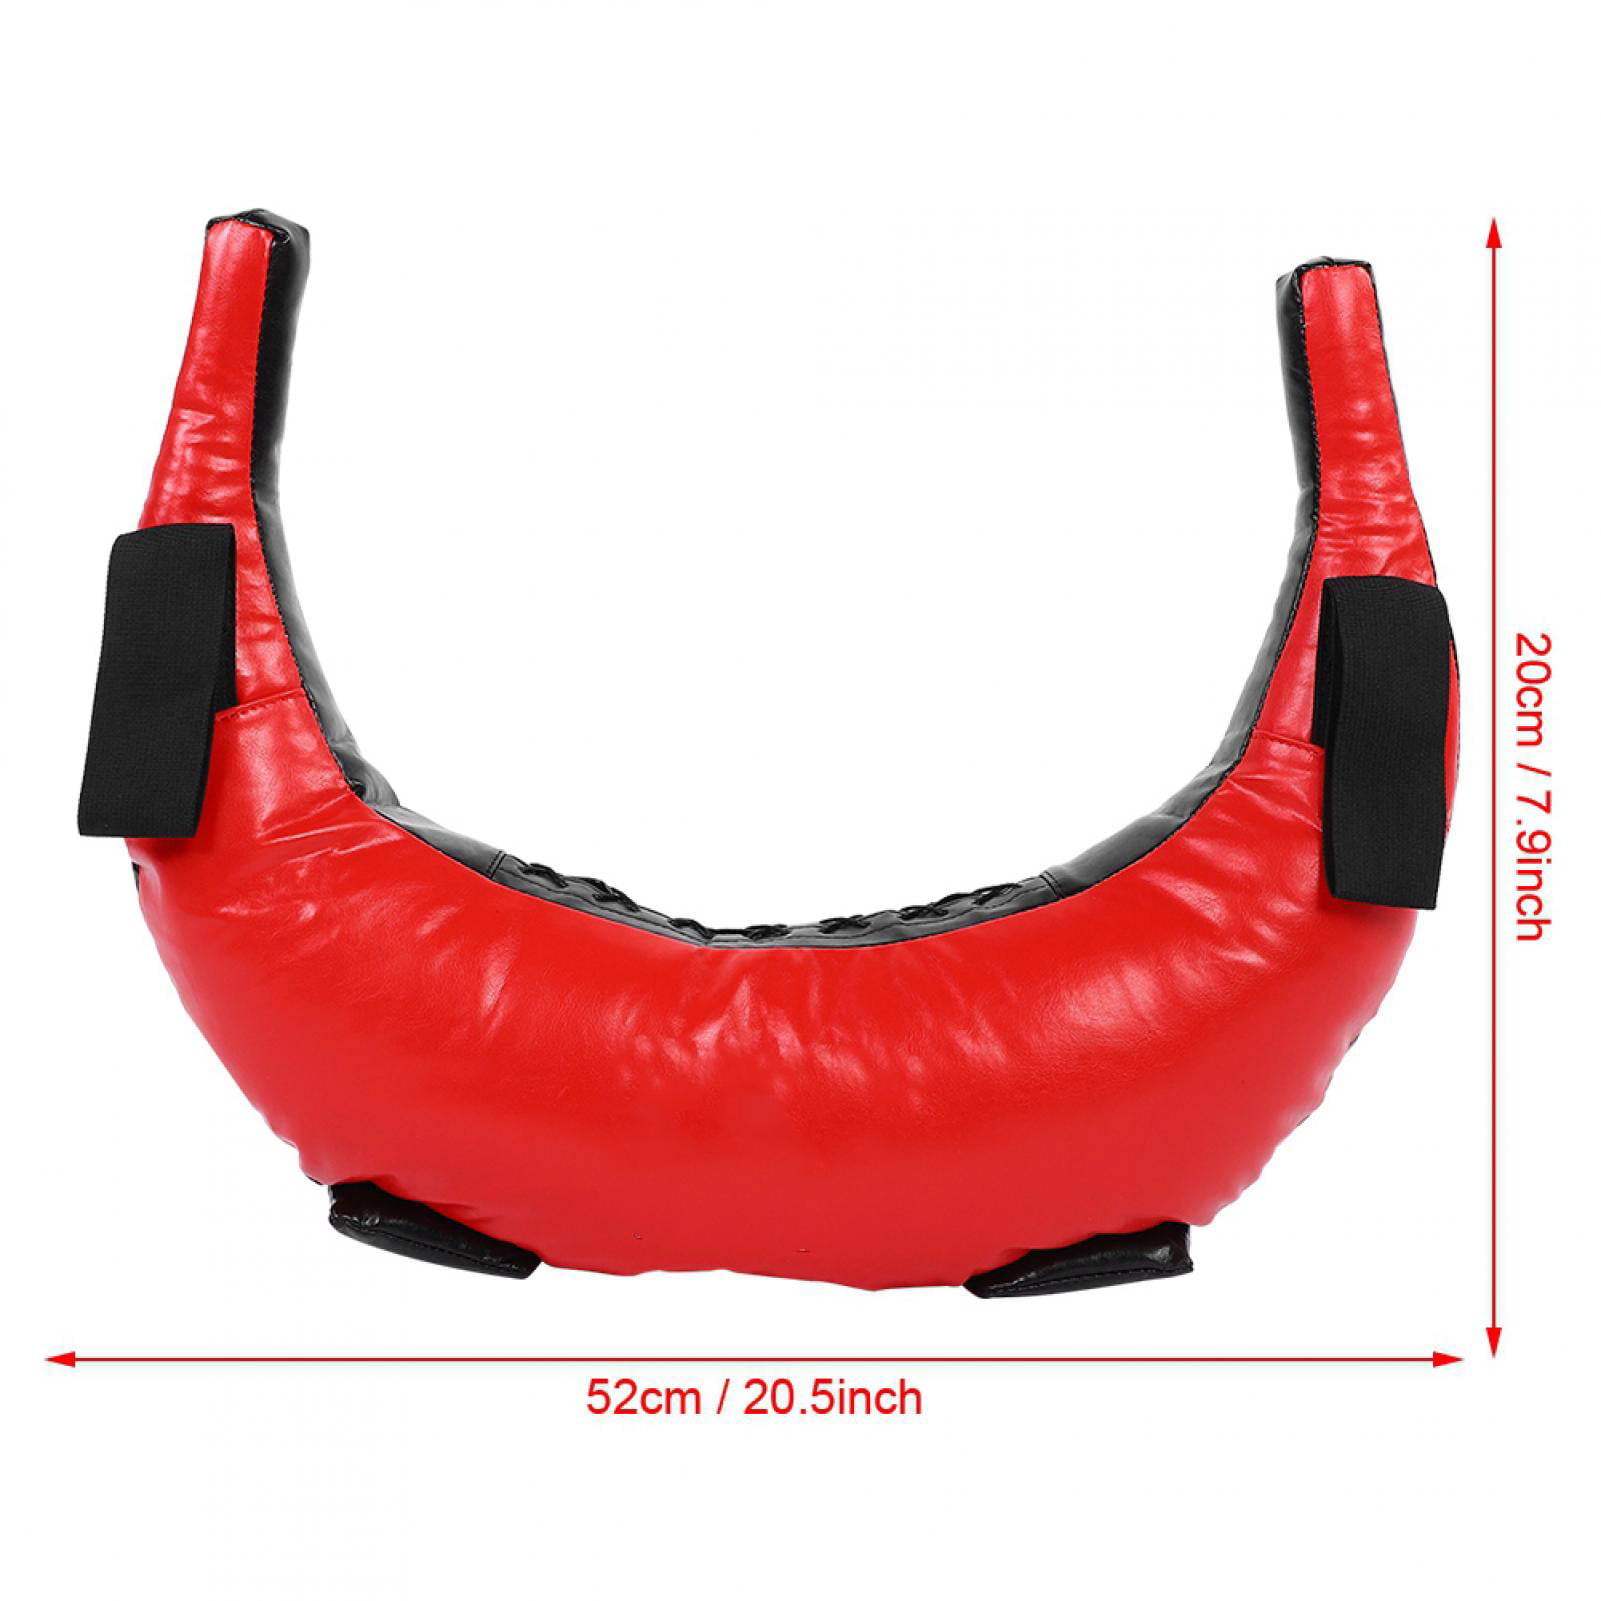 Portable Fitness Equipment For Home Gym lā Vestmon Sandbag Training Filled Weight Sand Power Bag Adjustable Weight Training Powerbag With Handles